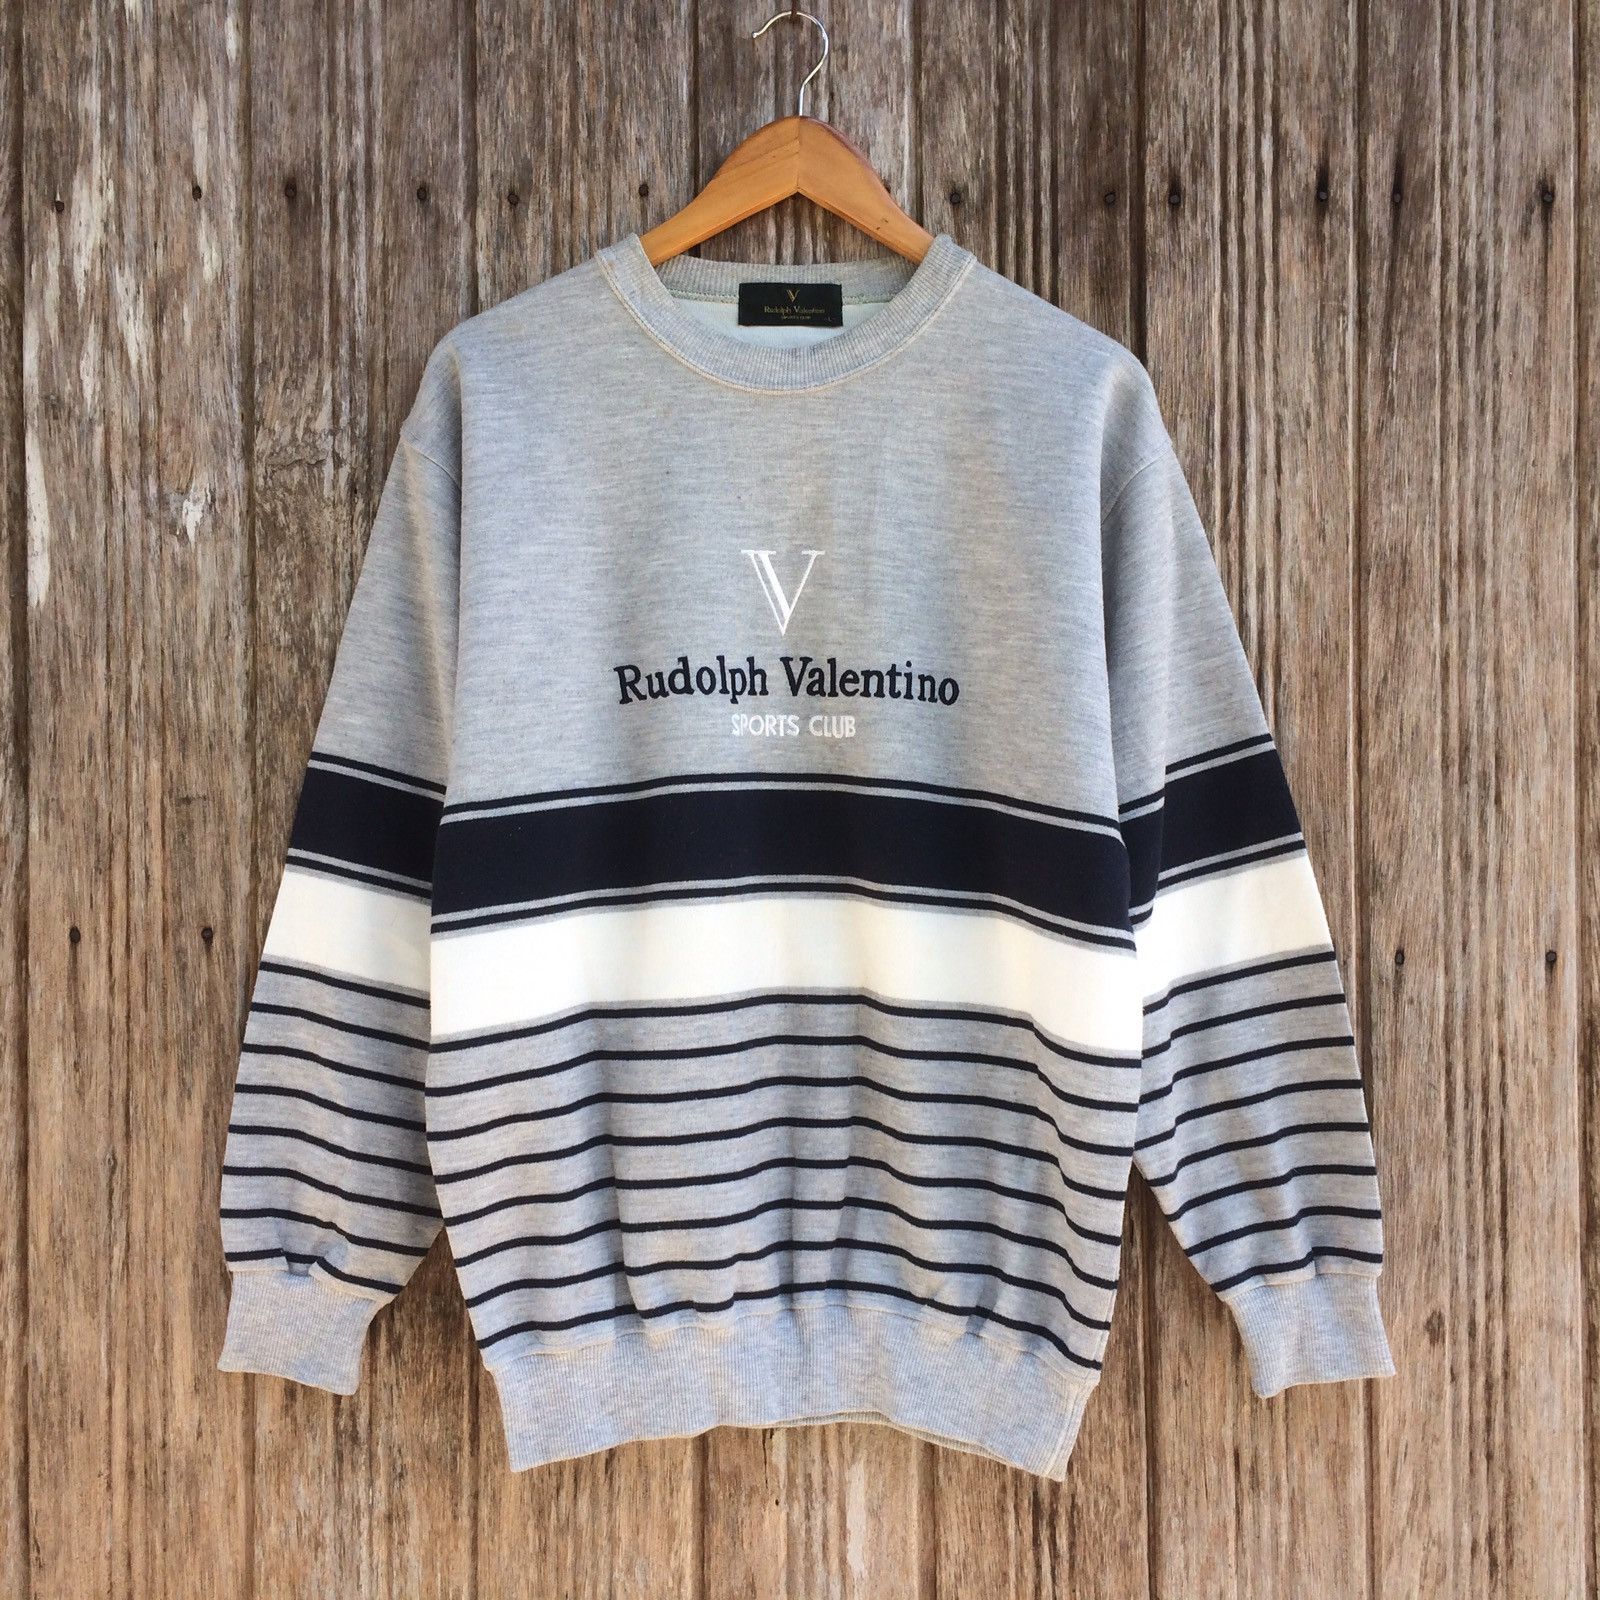 Trafikprop levering Energize Valentino Vintage Rudolph Valentino Sports Club Sweatshirt Pullover Rare  with stripe Pop Design Style Size L | Grailed